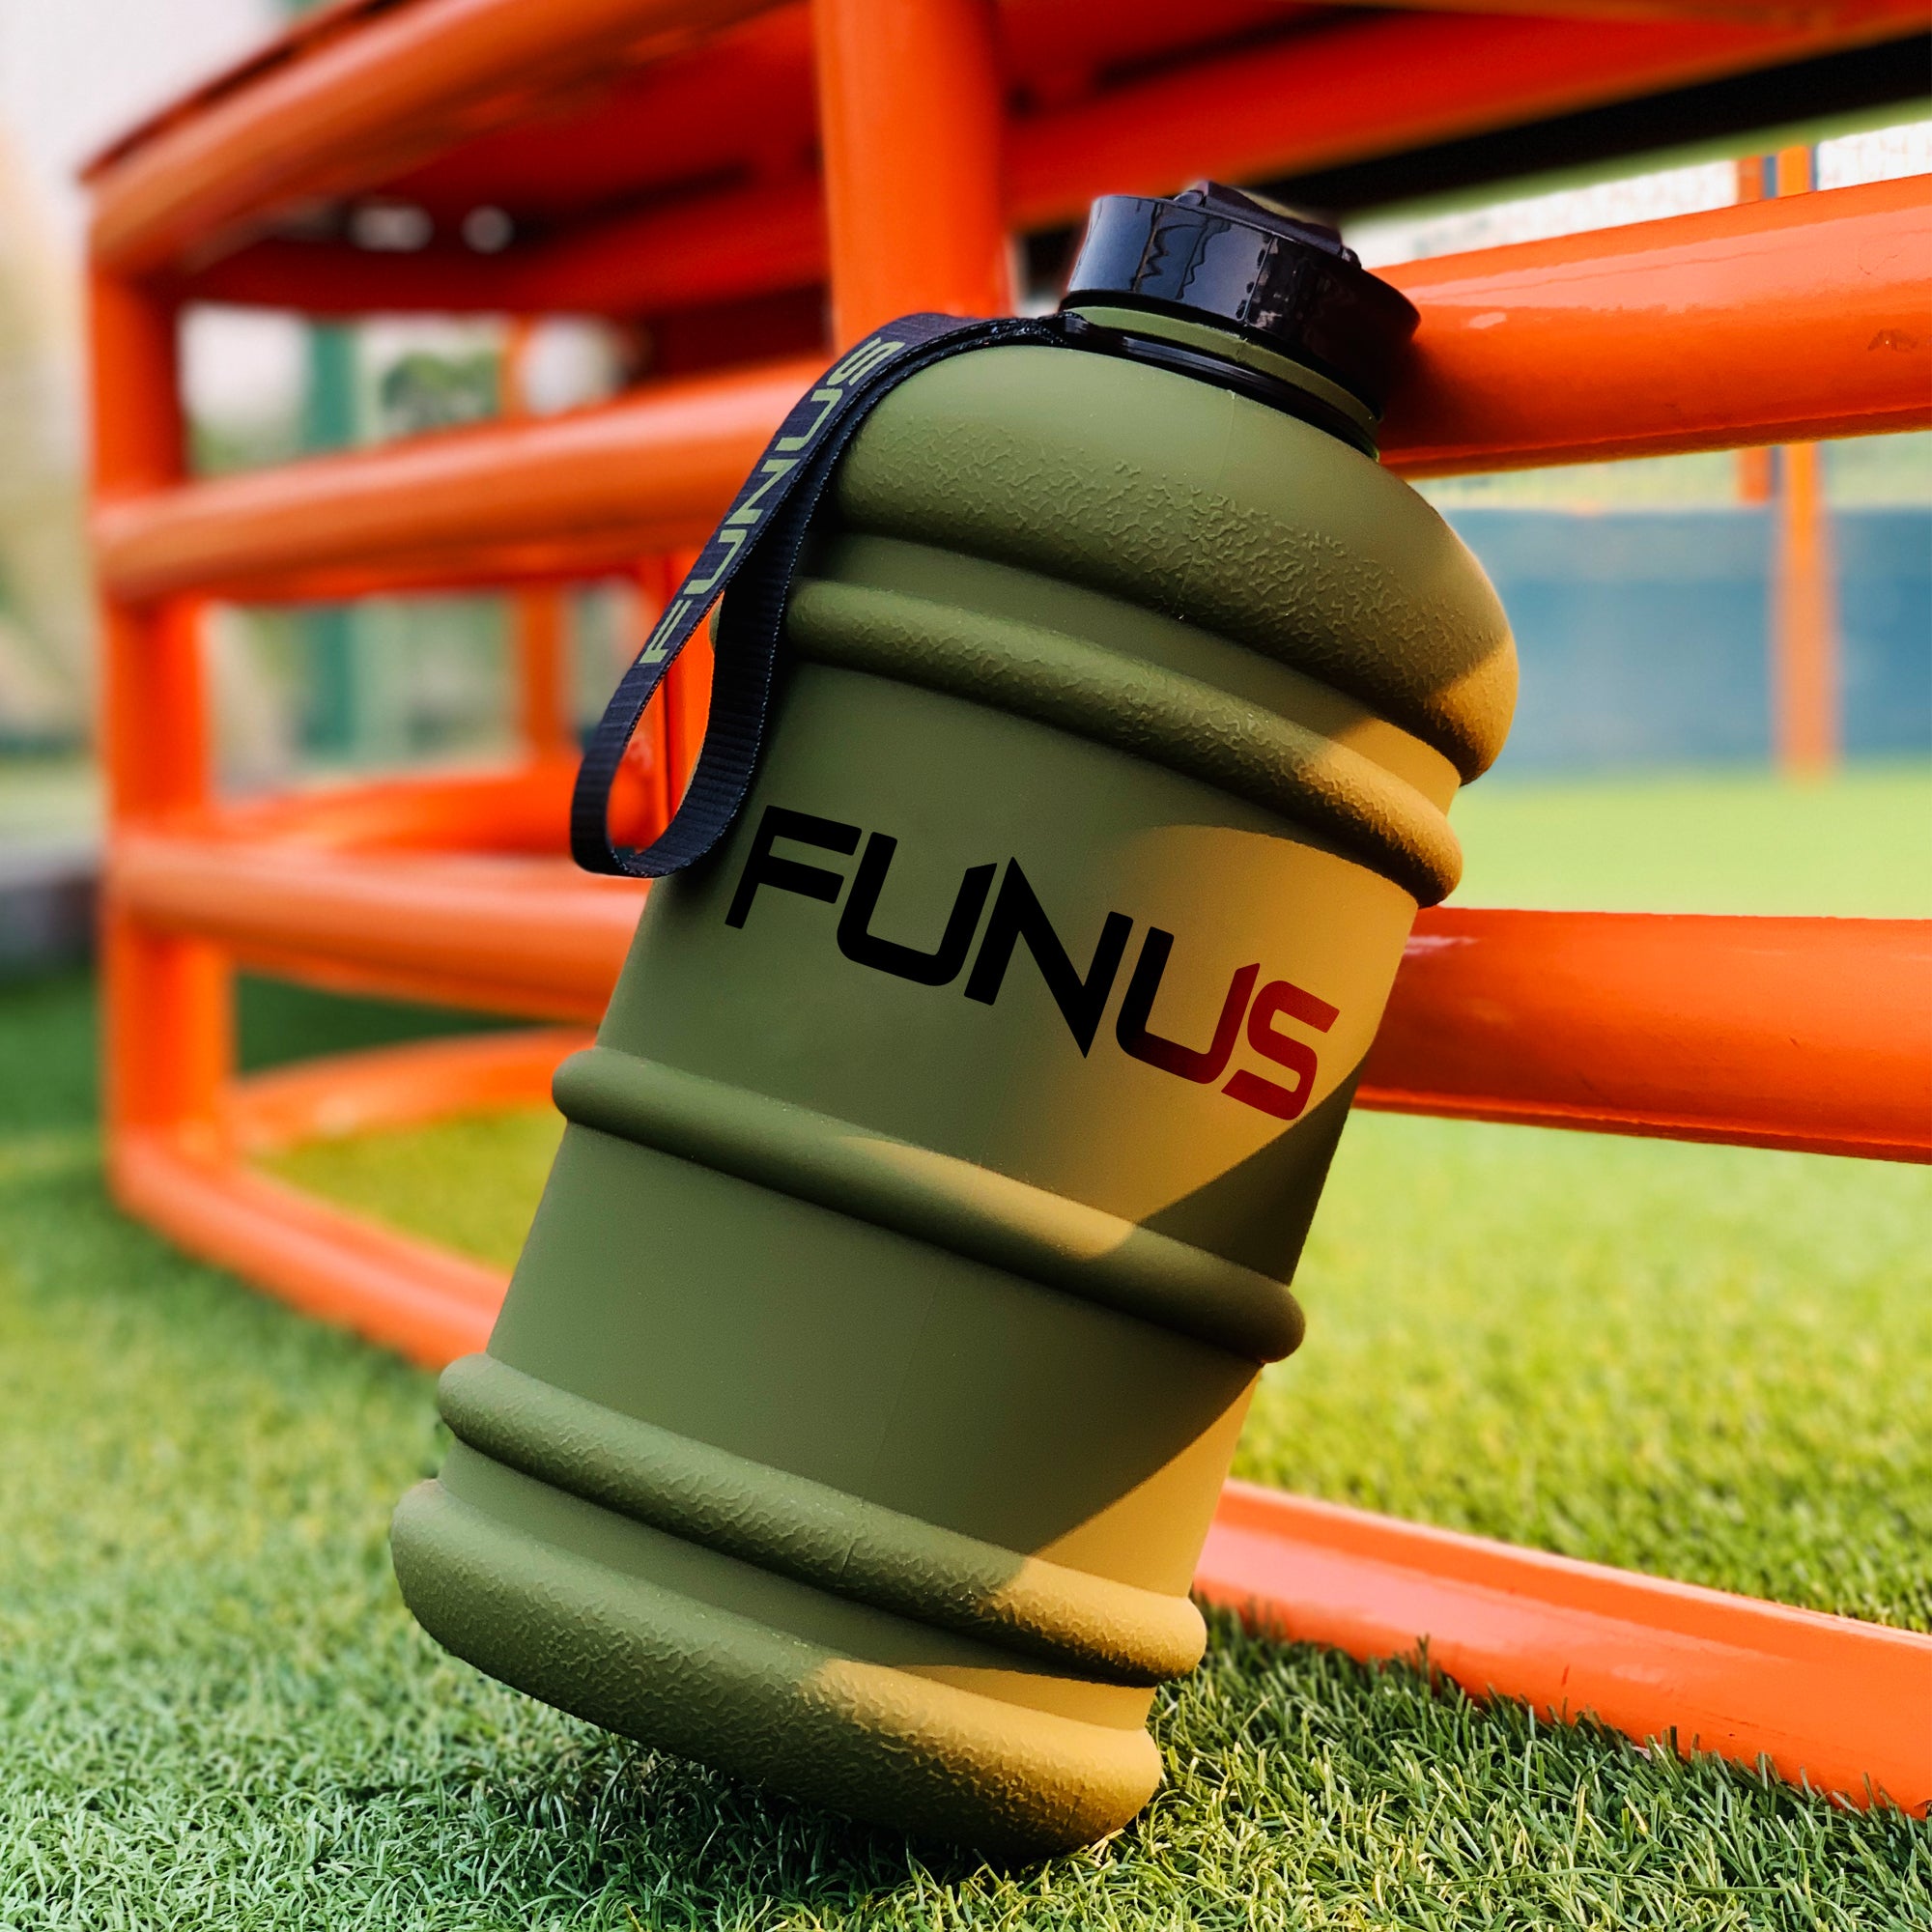 FUNUS Half Gallon Water Bottle Motivational with Time Marker, Big